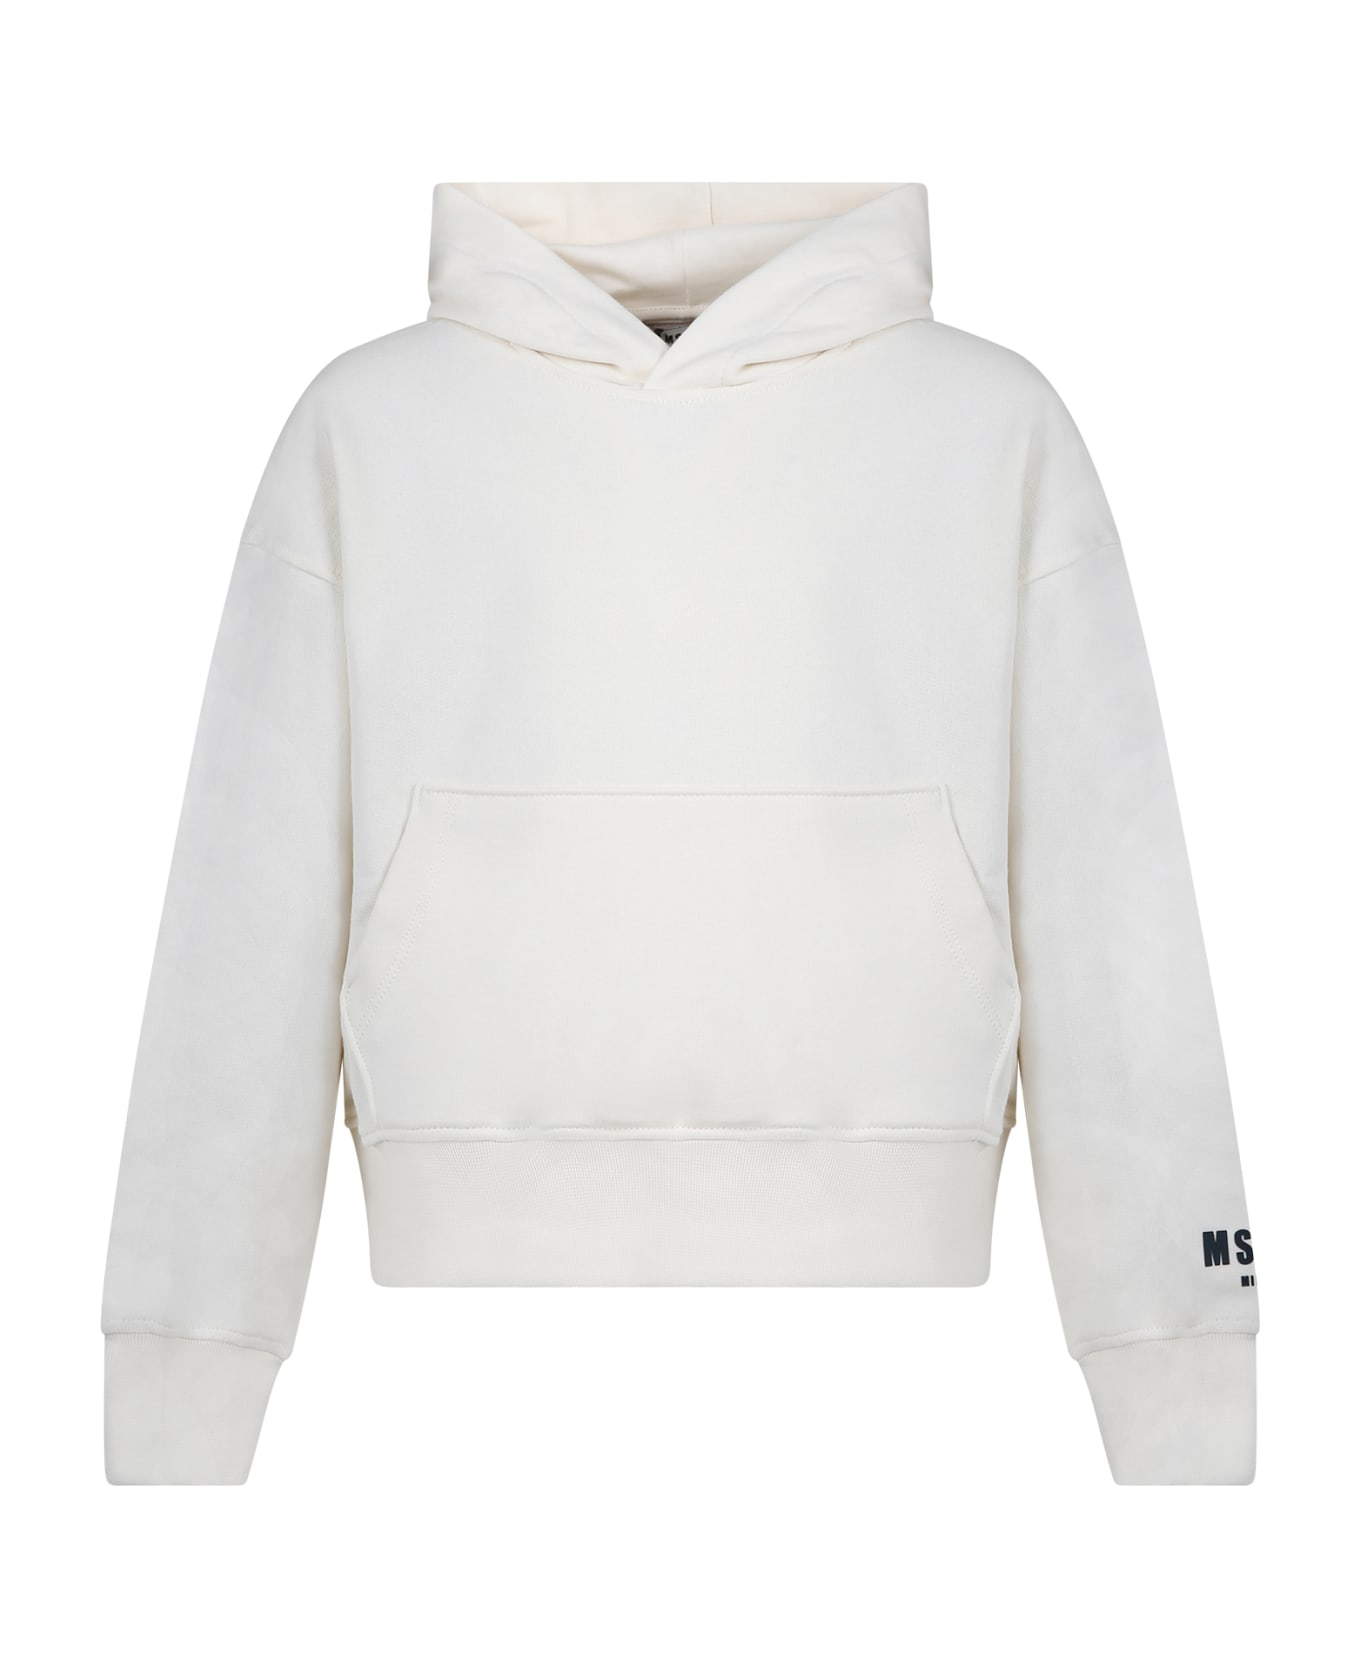 MSGM Ivory Sweatshirt For Boy With Logo - Ivory